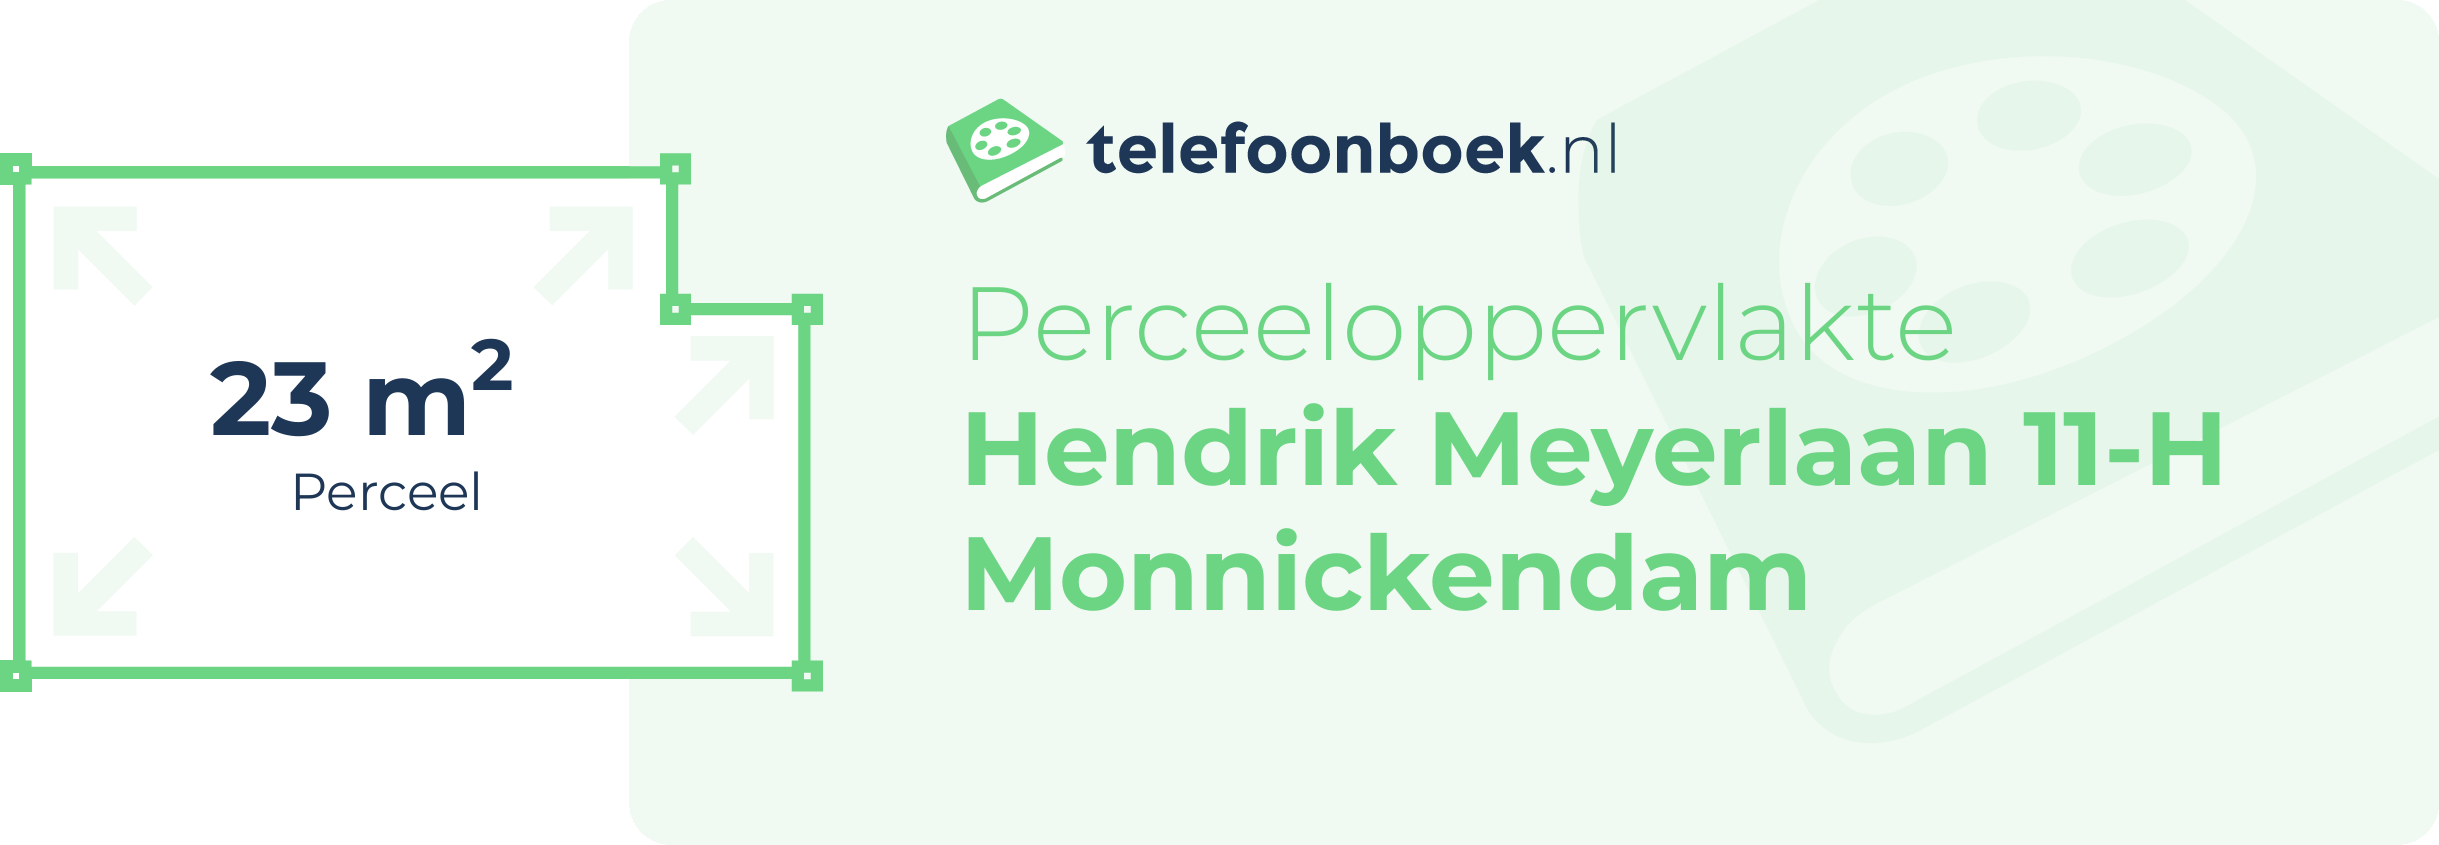 Perceeloppervlakte Hendrik Meyerlaan 11-H Monnickendam